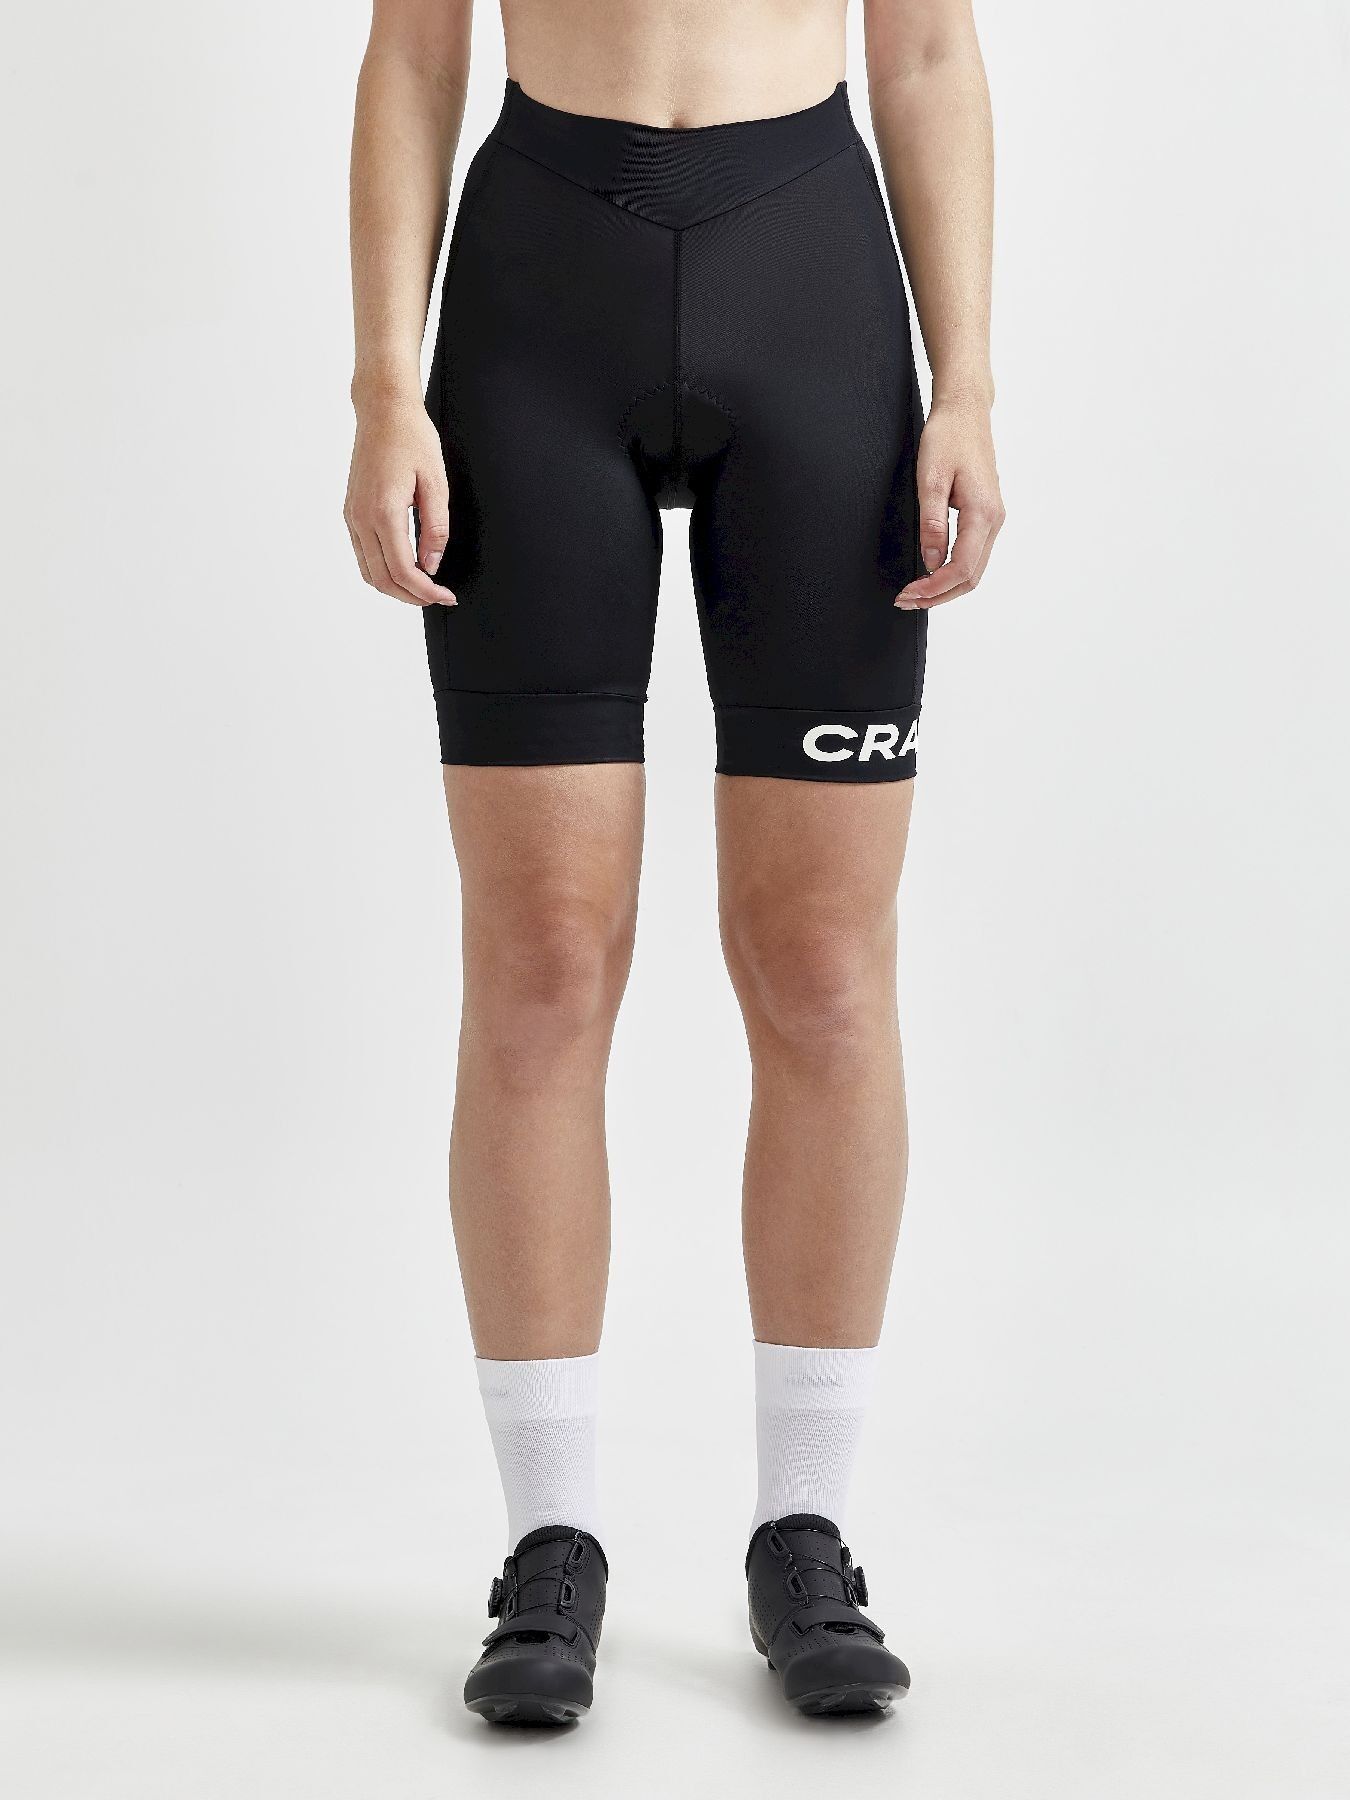 Craft Core Endurance Shorts - Fahrradhose - Damen